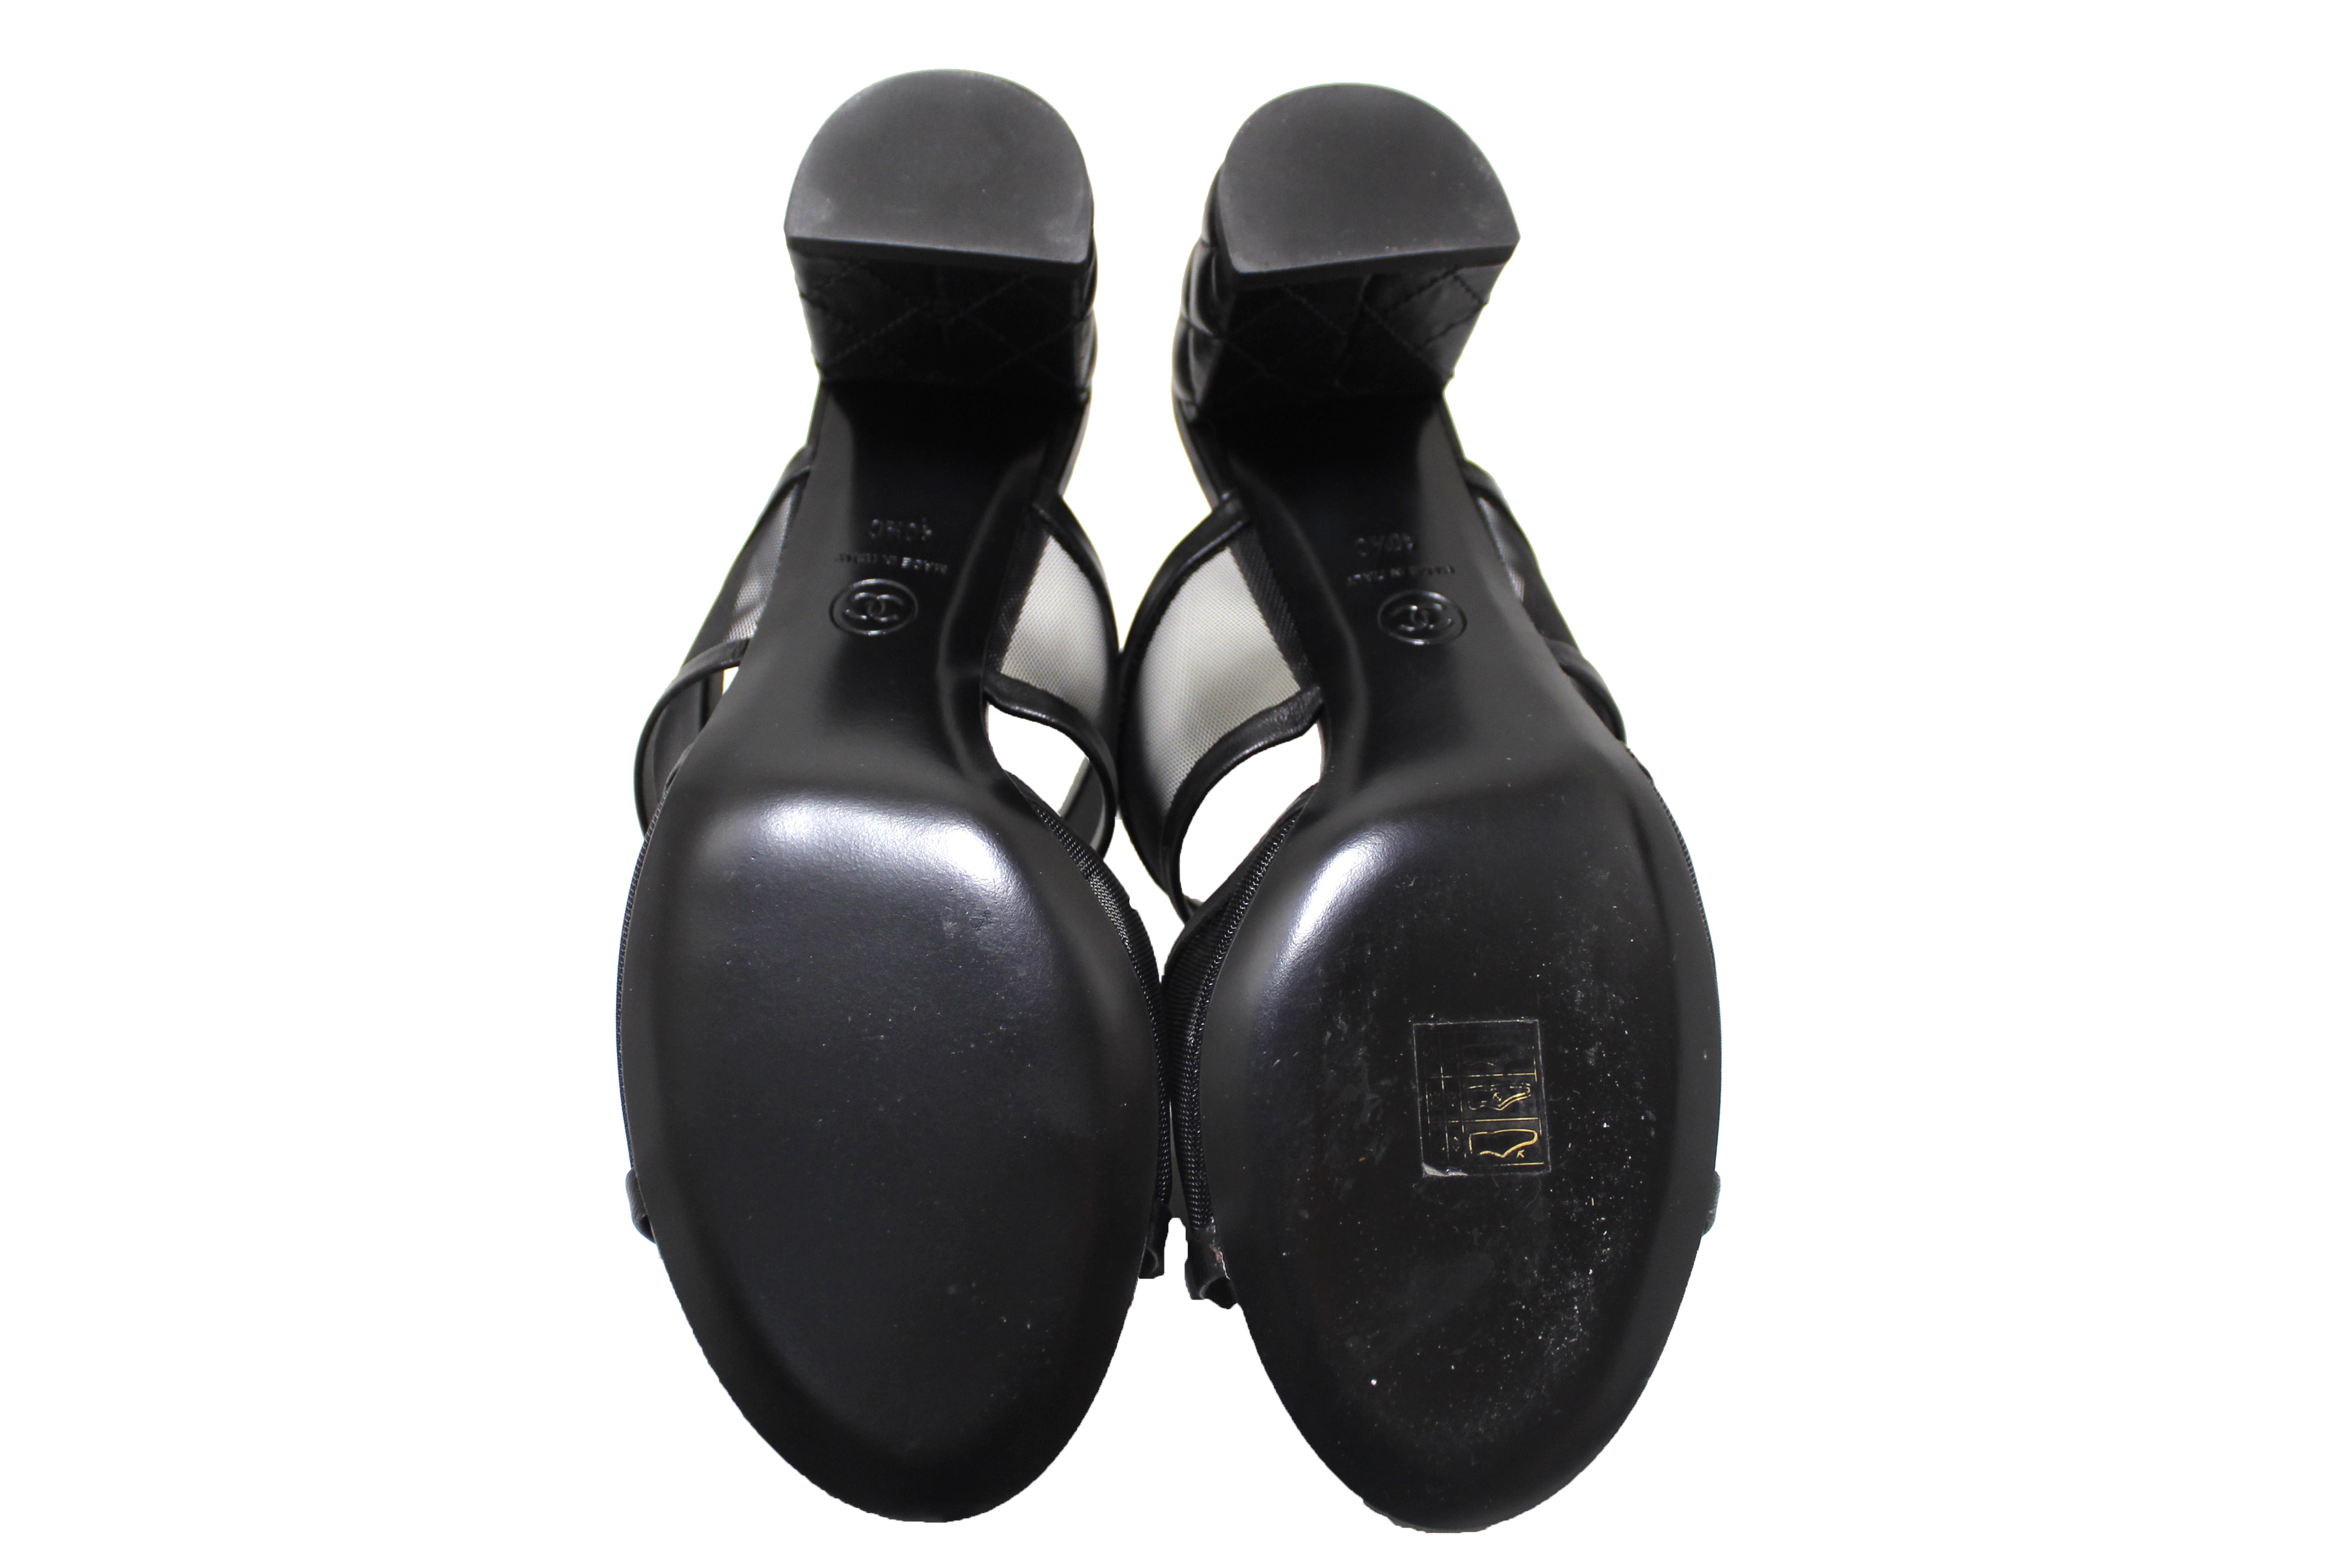 Chanel 08c, 2008 Cruise Patent Leather Orange Peep Toe Pump Heels EU 35.5 US 4.5/5